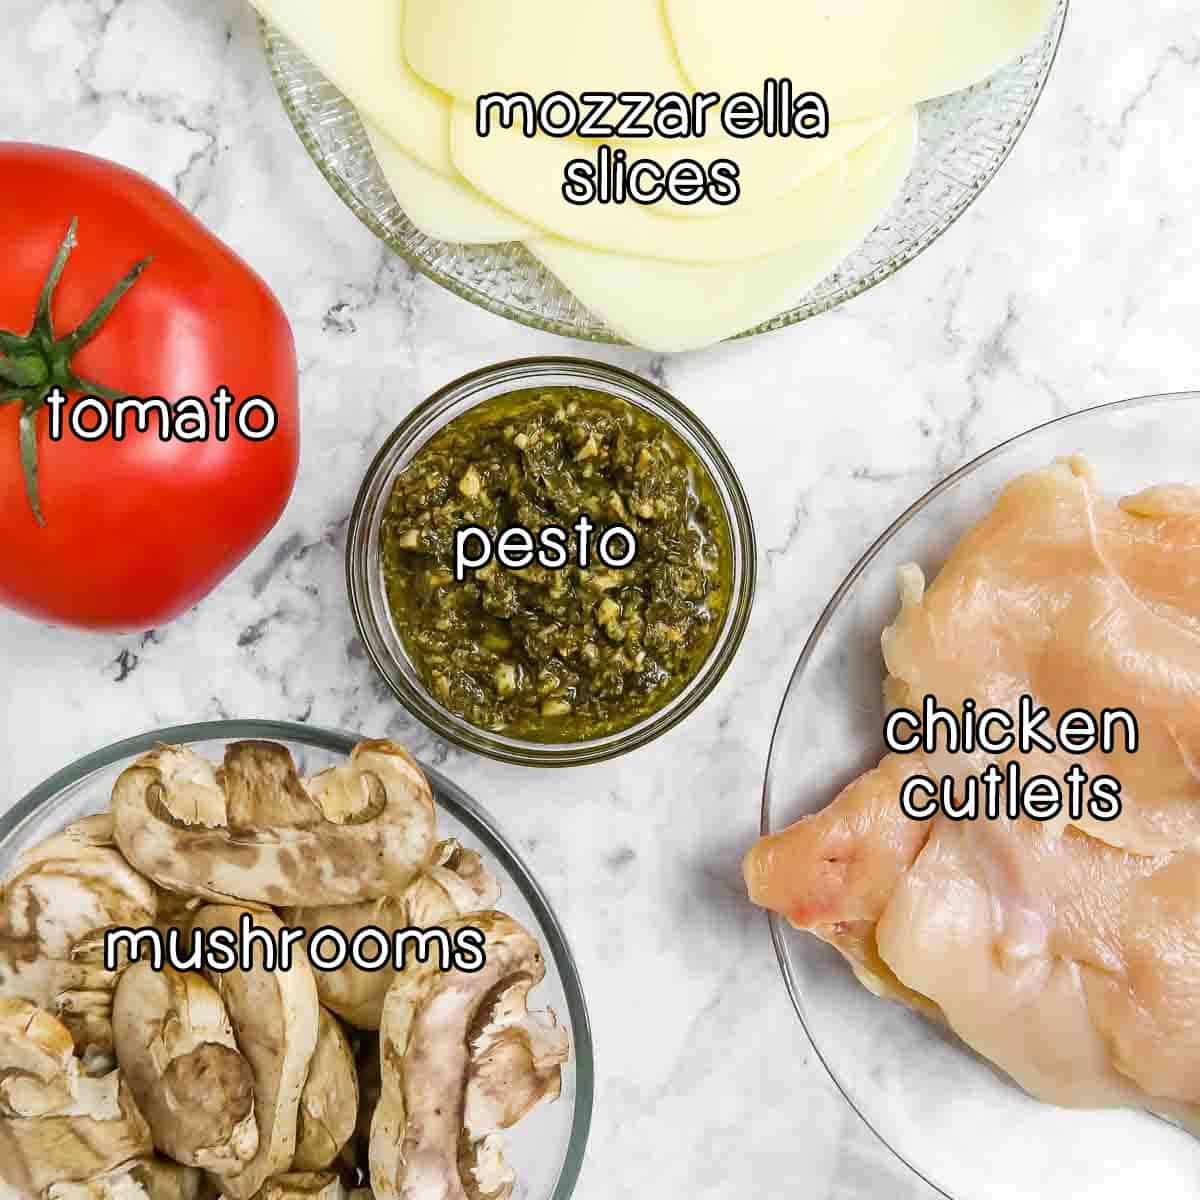 Overhead shot of ingredients- mozzarella slices, tomato, pesto, chicken cutlets, and mushrooms.